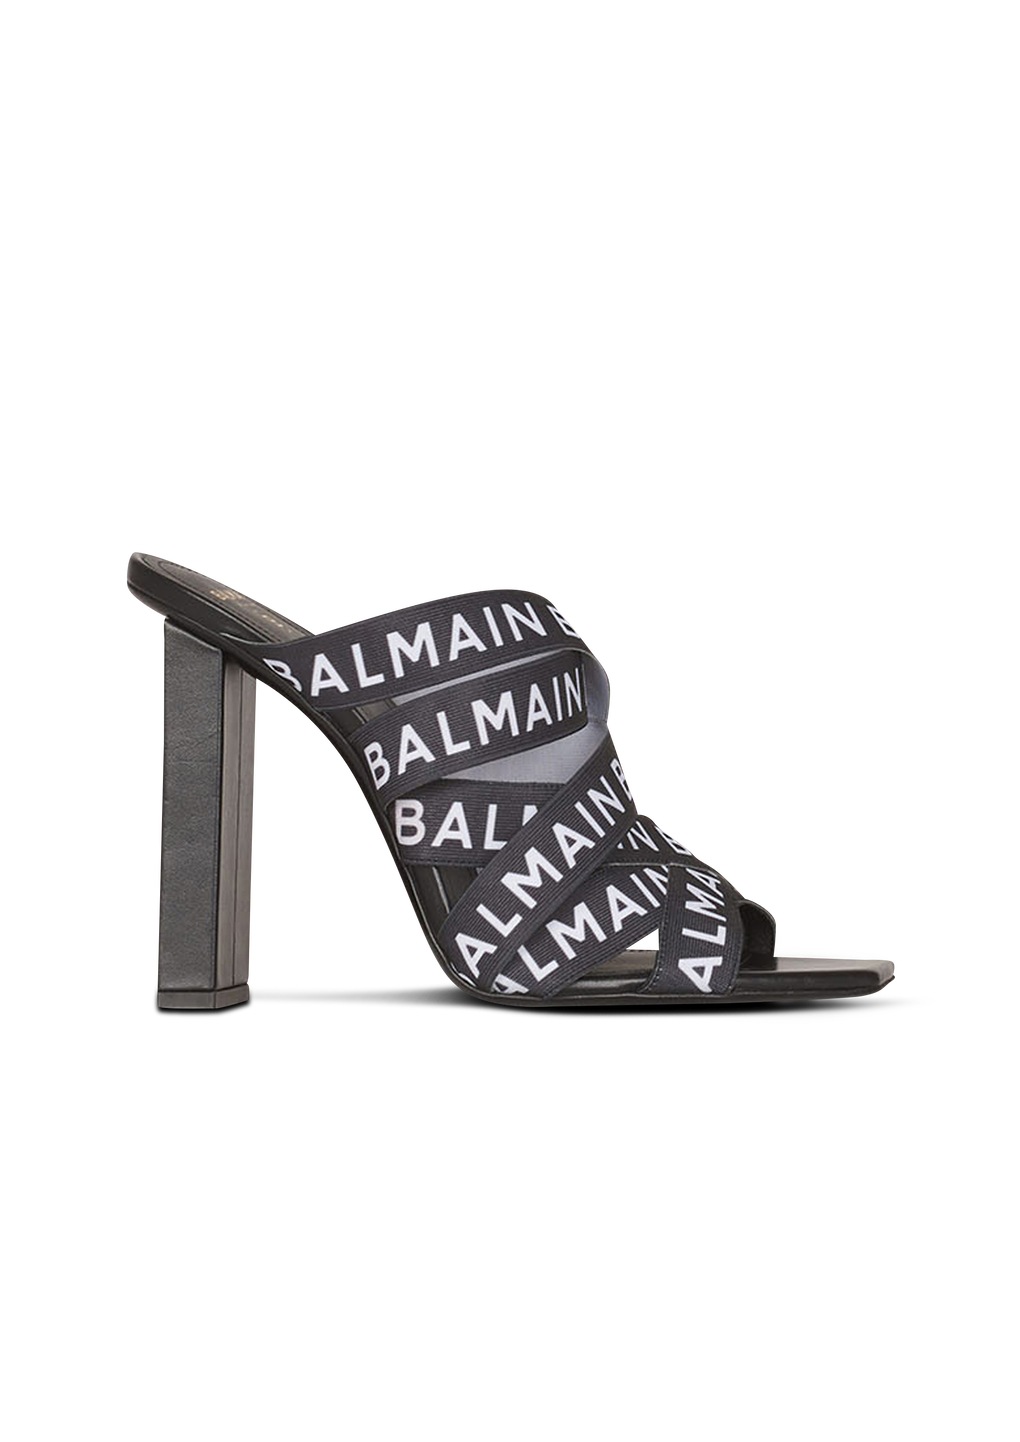 Sandalen Union mit Balmain-Logo, schwarz, hi-res